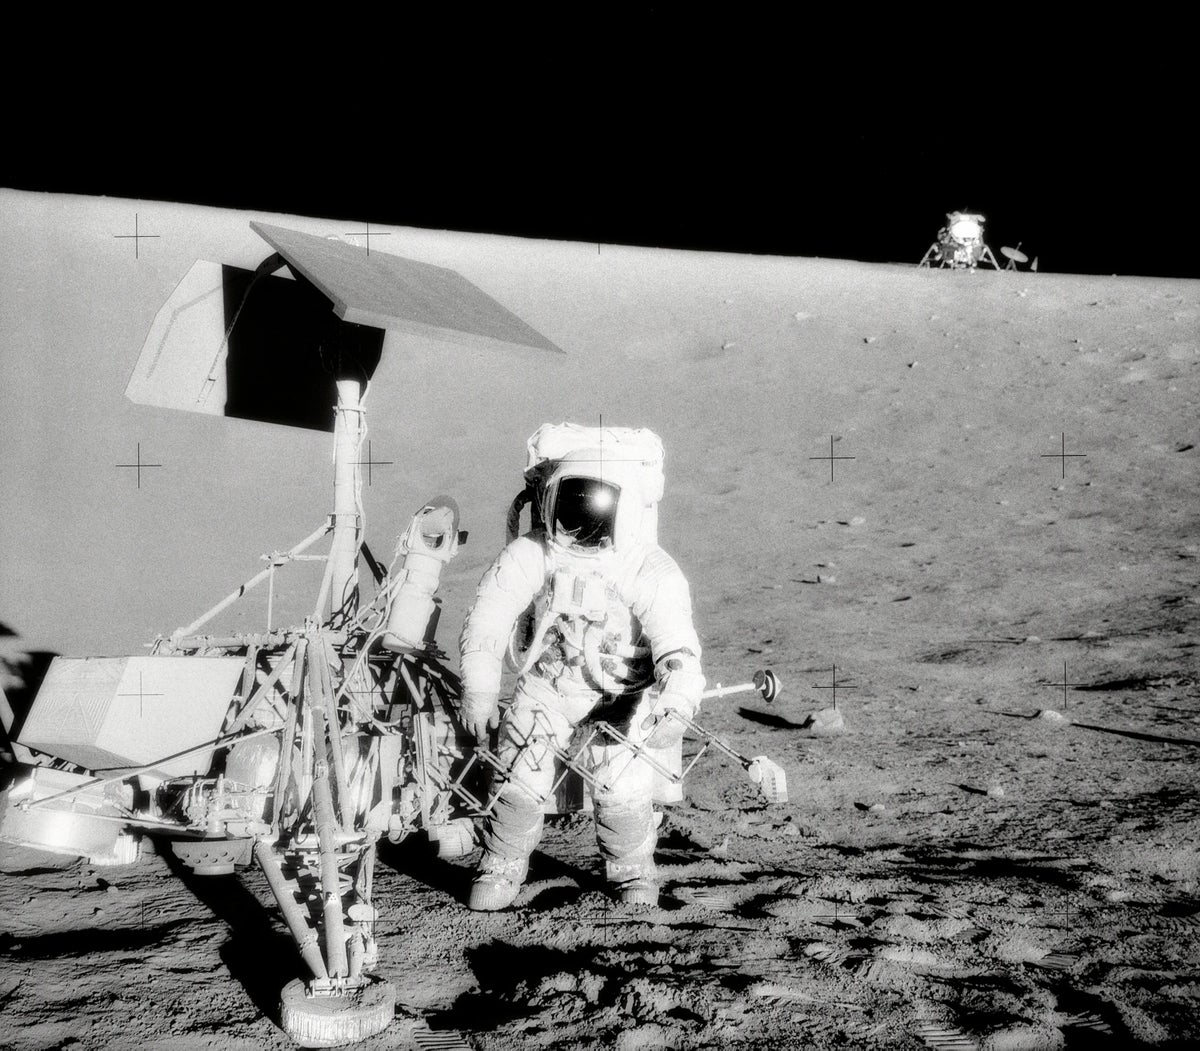 Lunar Dust Could ‘Sandblast’ Astronauts on the Moon, Studies Warn